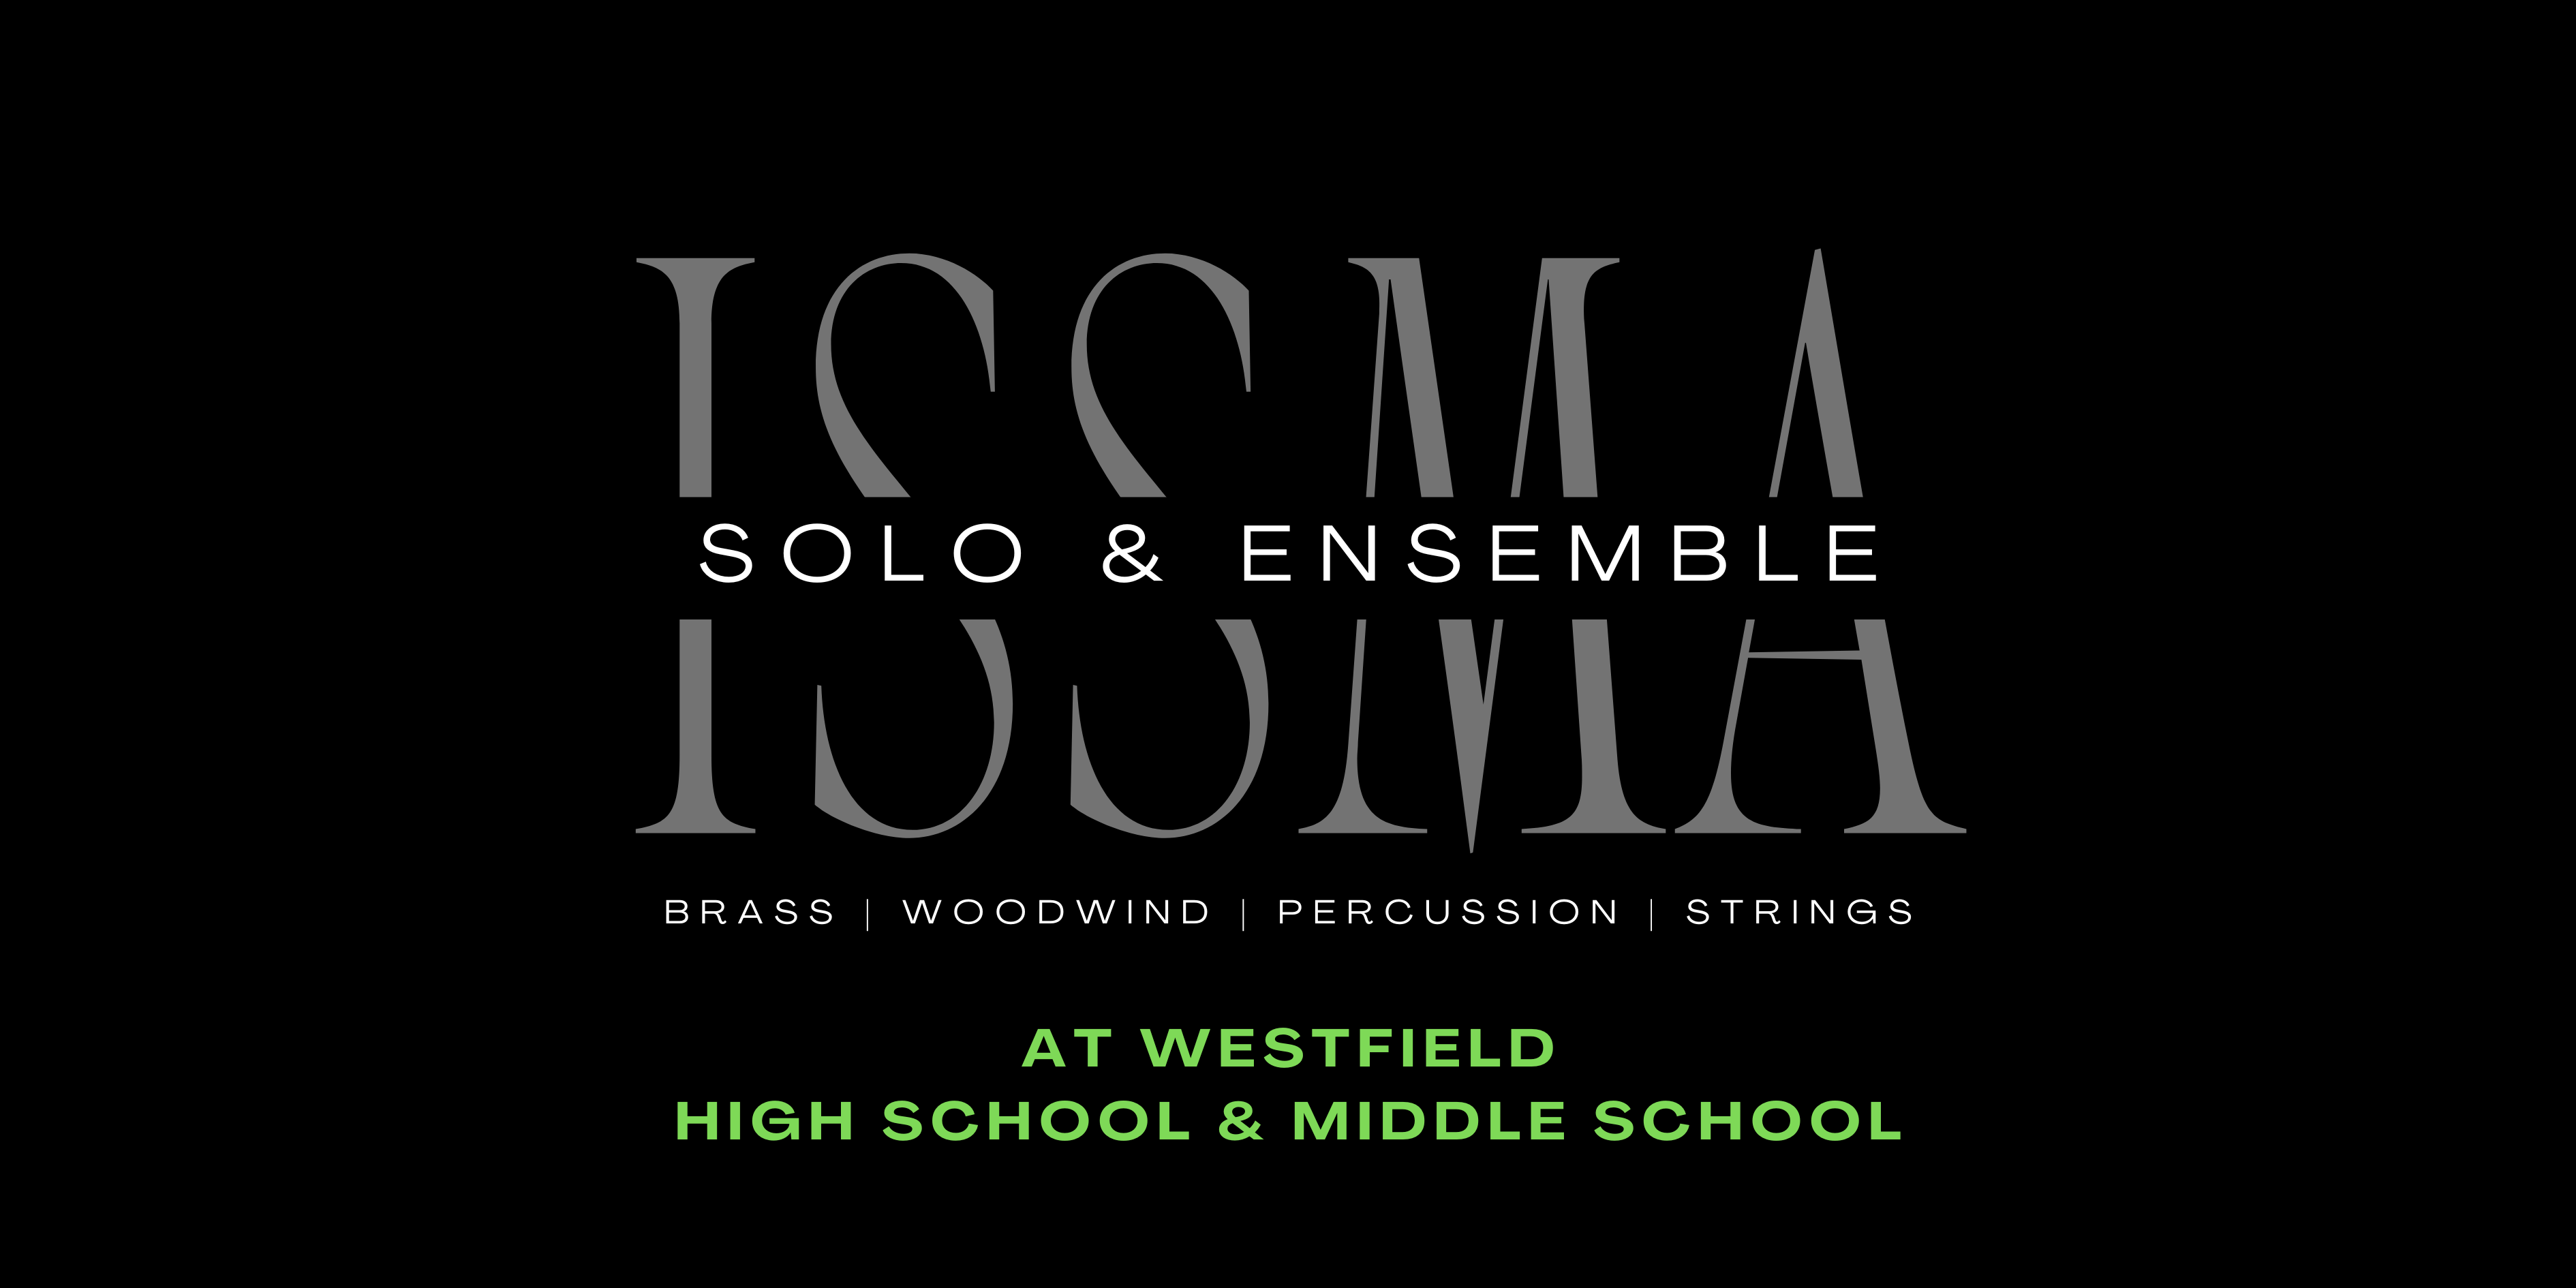 ISSMA Solo Ensemble Westfield Band